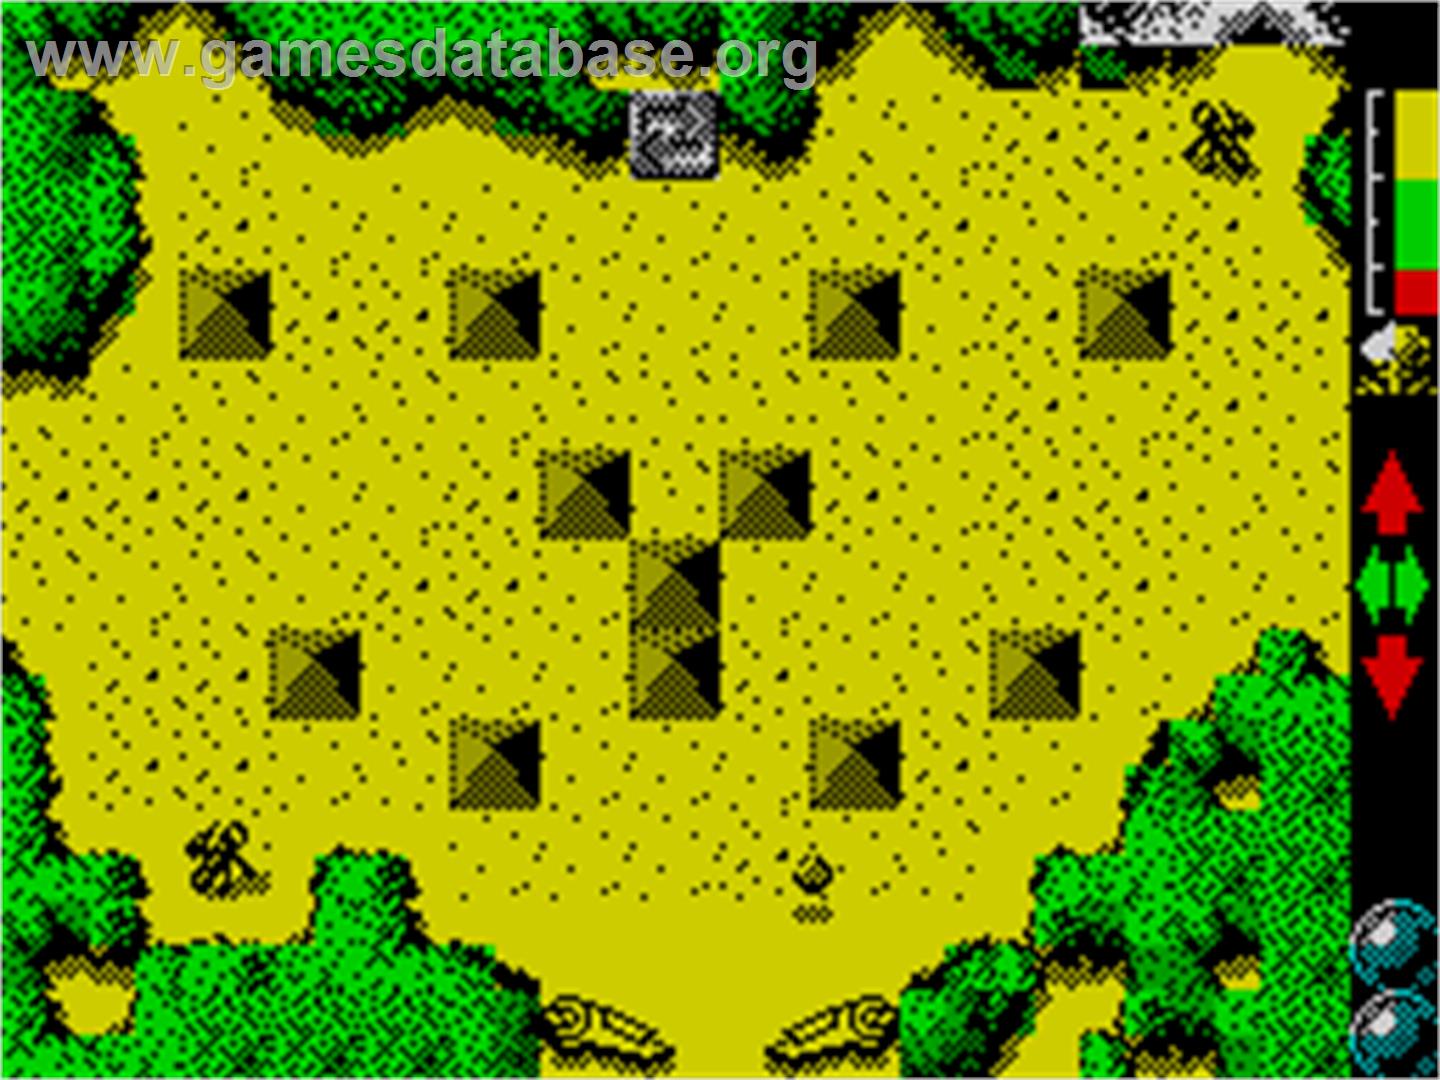 Score 3020 - Sinclair ZX Spectrum - Artwork - In Game